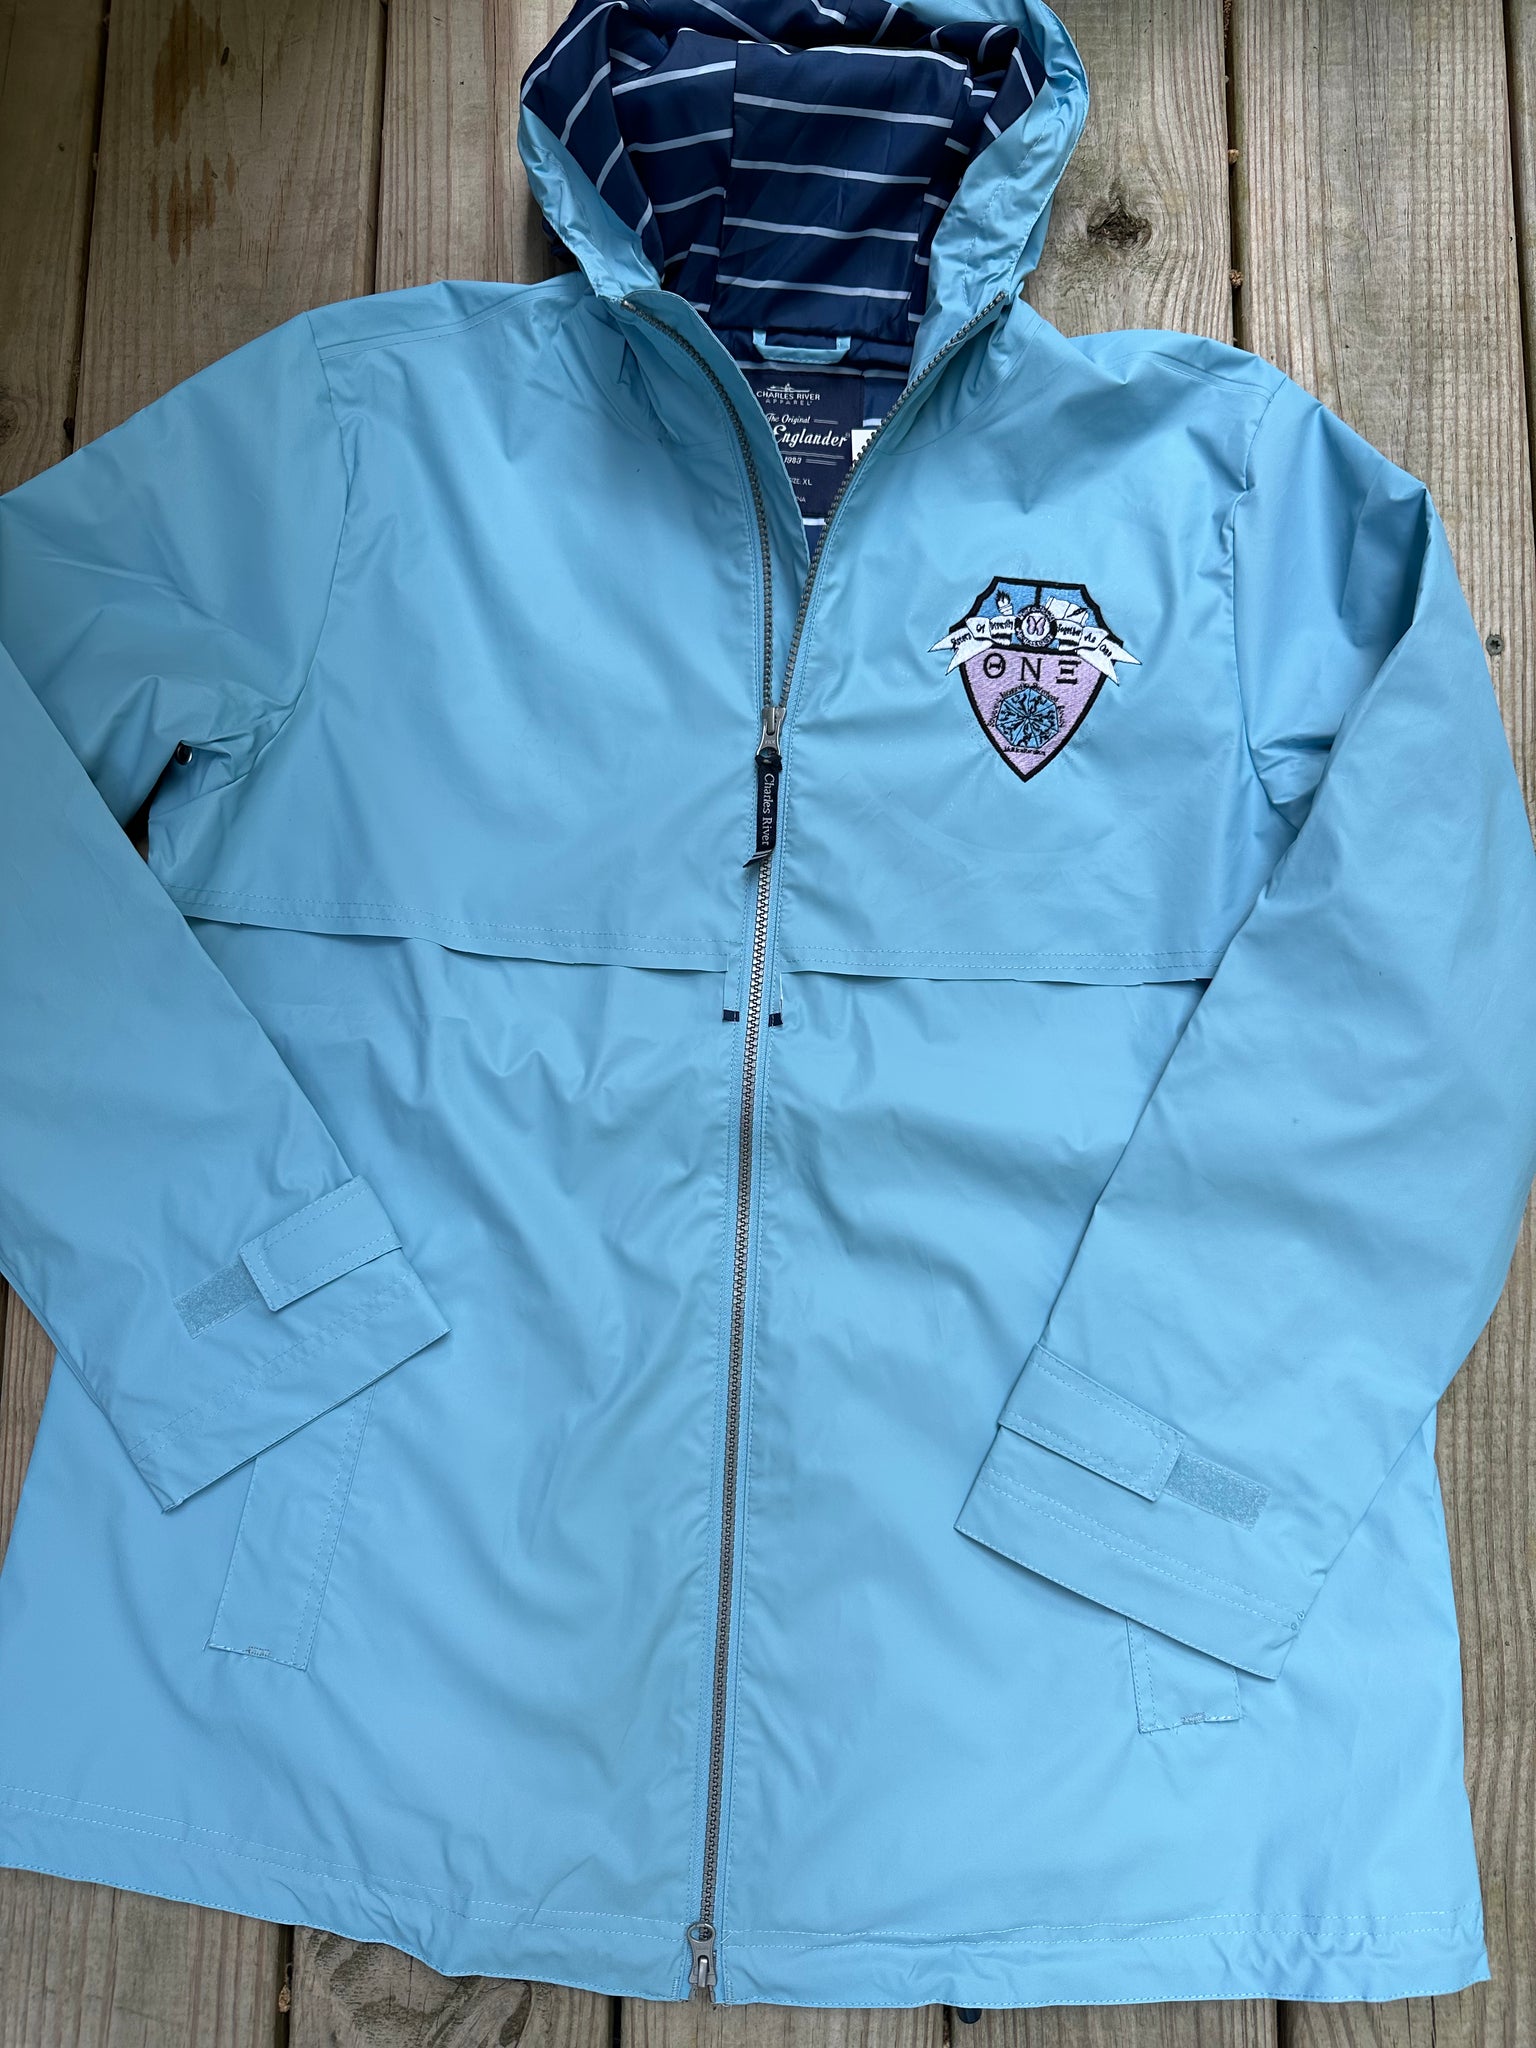 Theta Nu Xi - Sorority Premium New Englander Rain Jacket